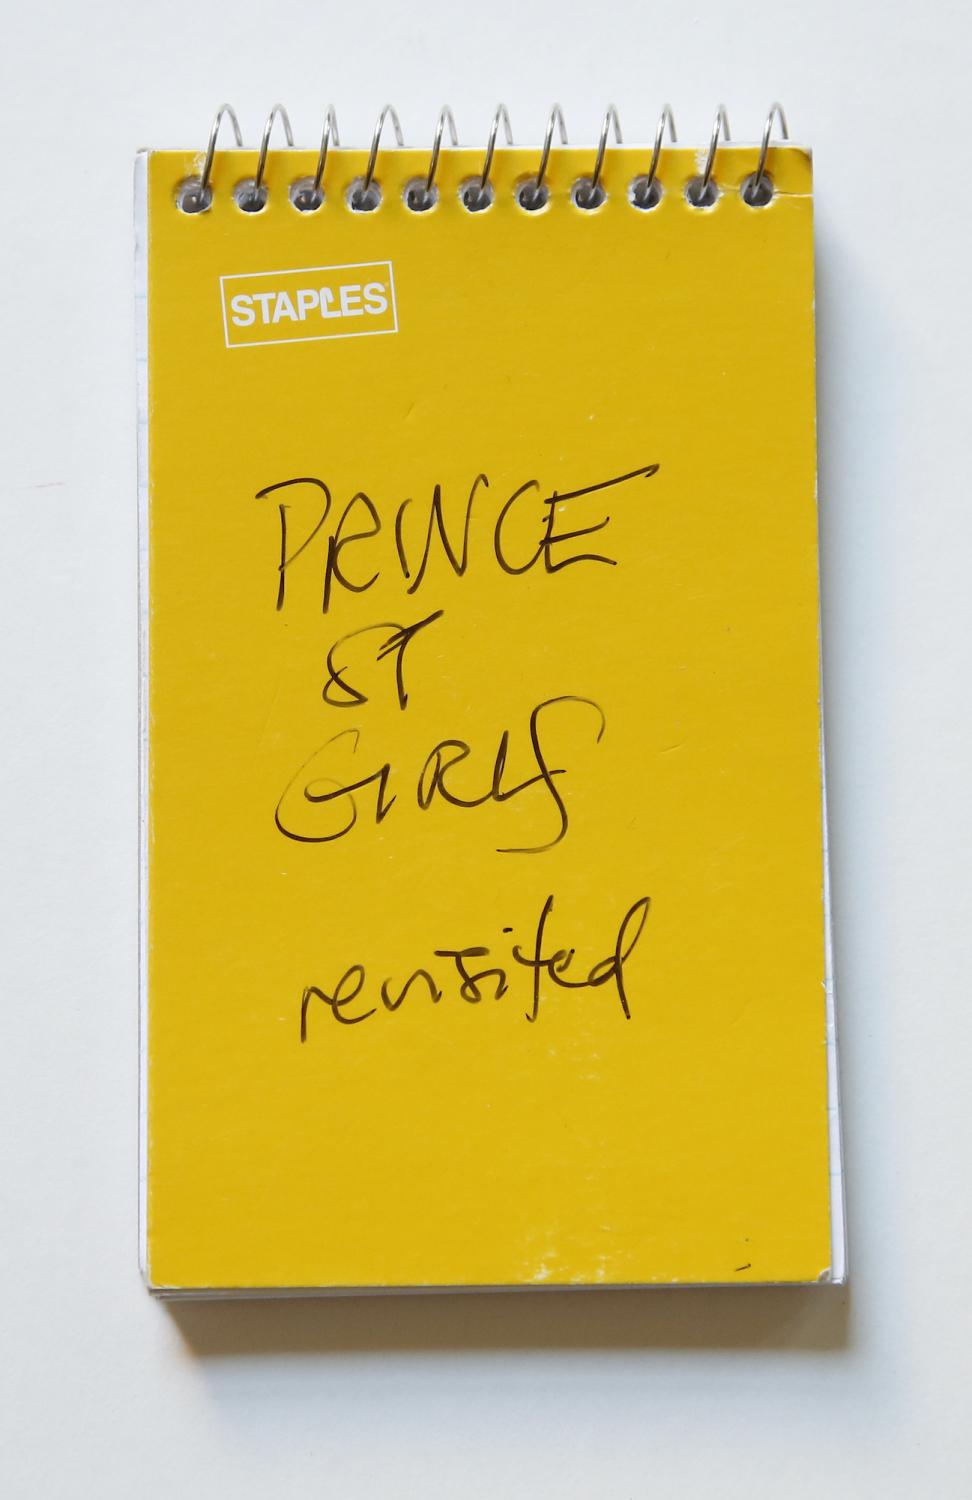 Prince Street Girls Books - Prince Street Girls revisited notebook, 2013